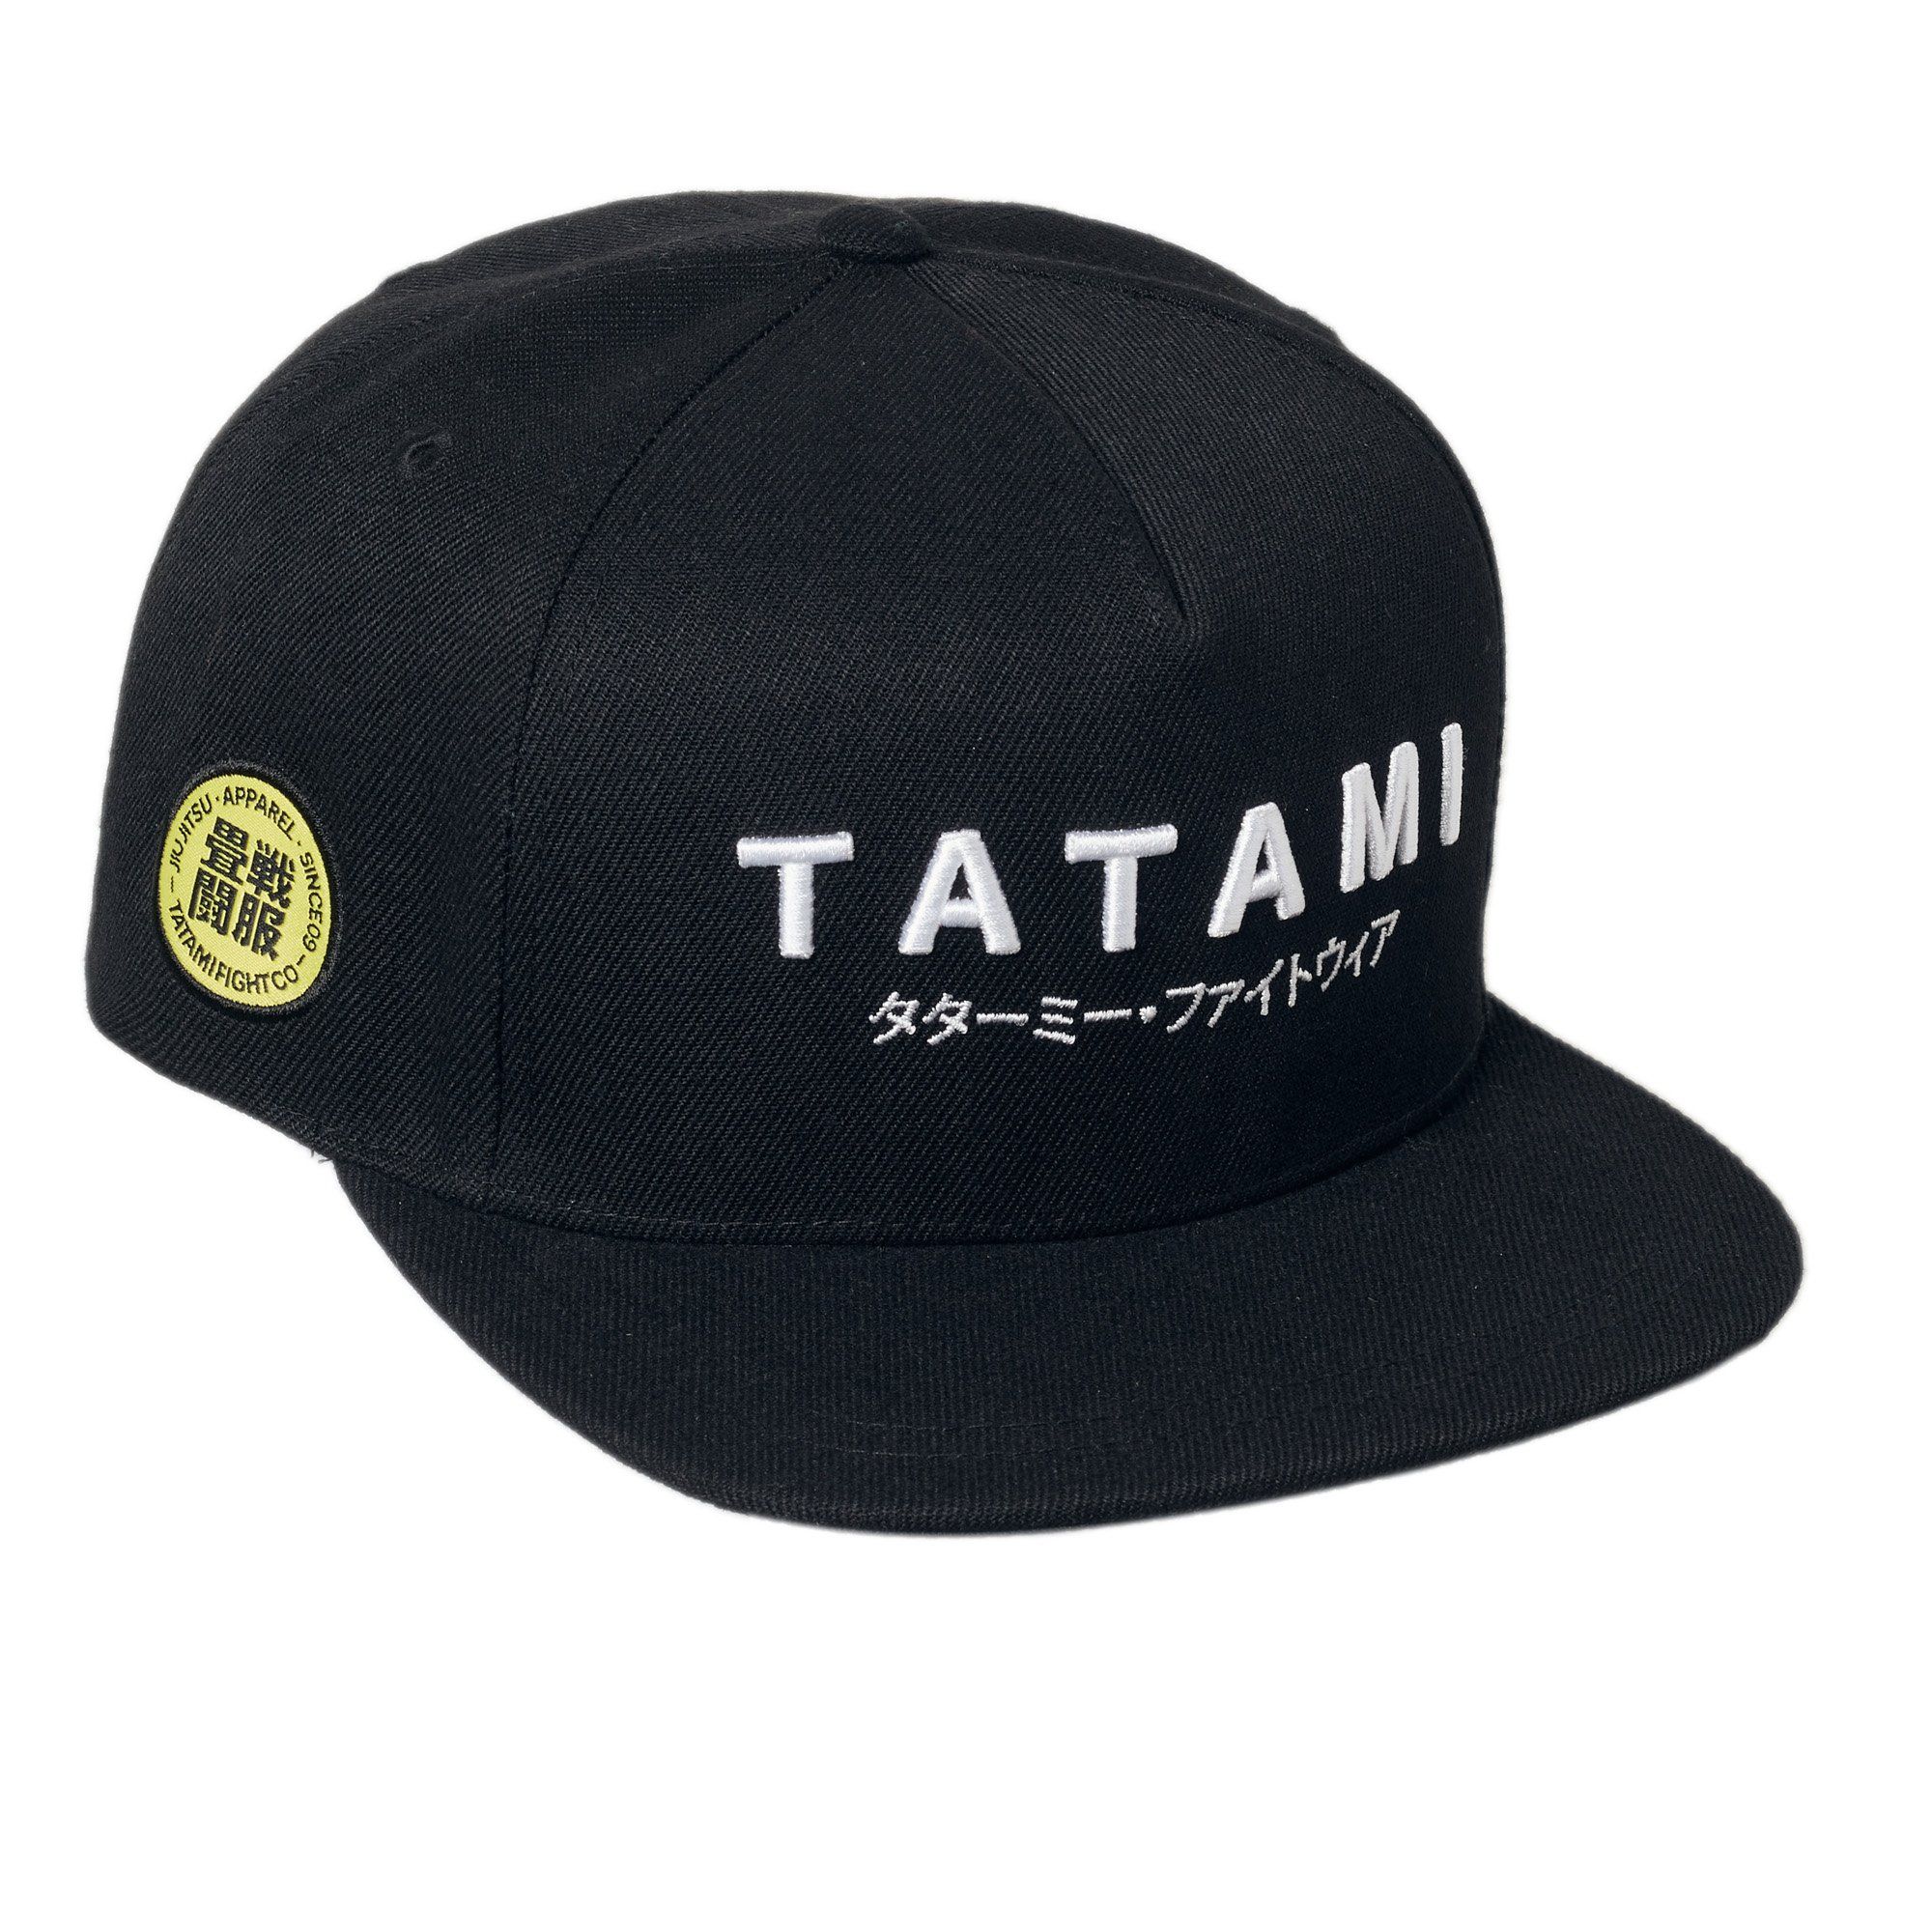 Tatami Katakana snapback